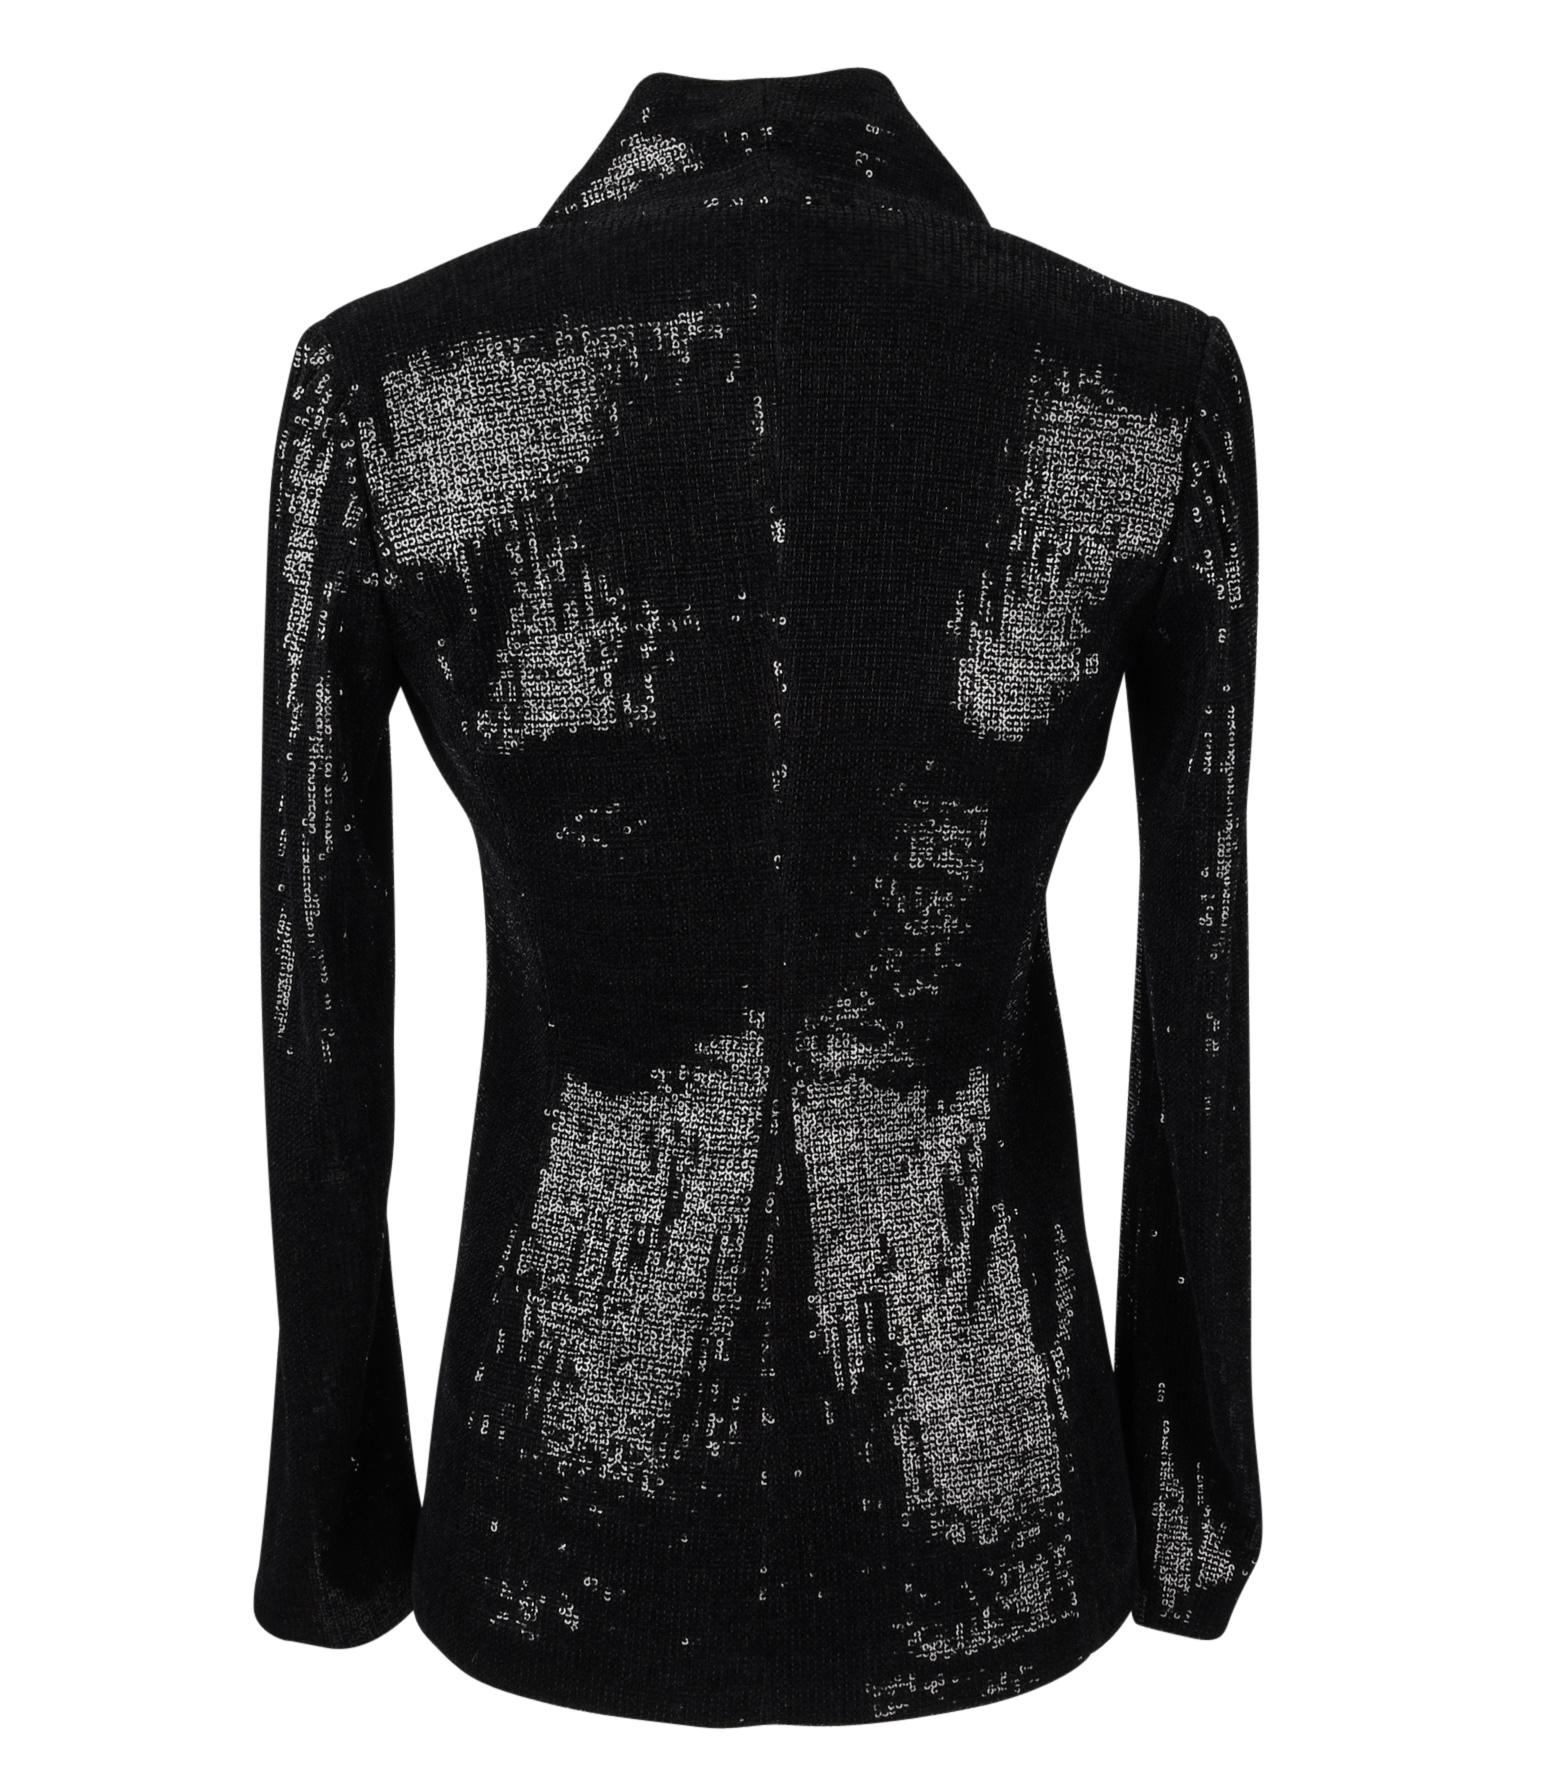 Giorgio Armani Jacket Black Sequined Single Breast 38 / 6 nwt 1